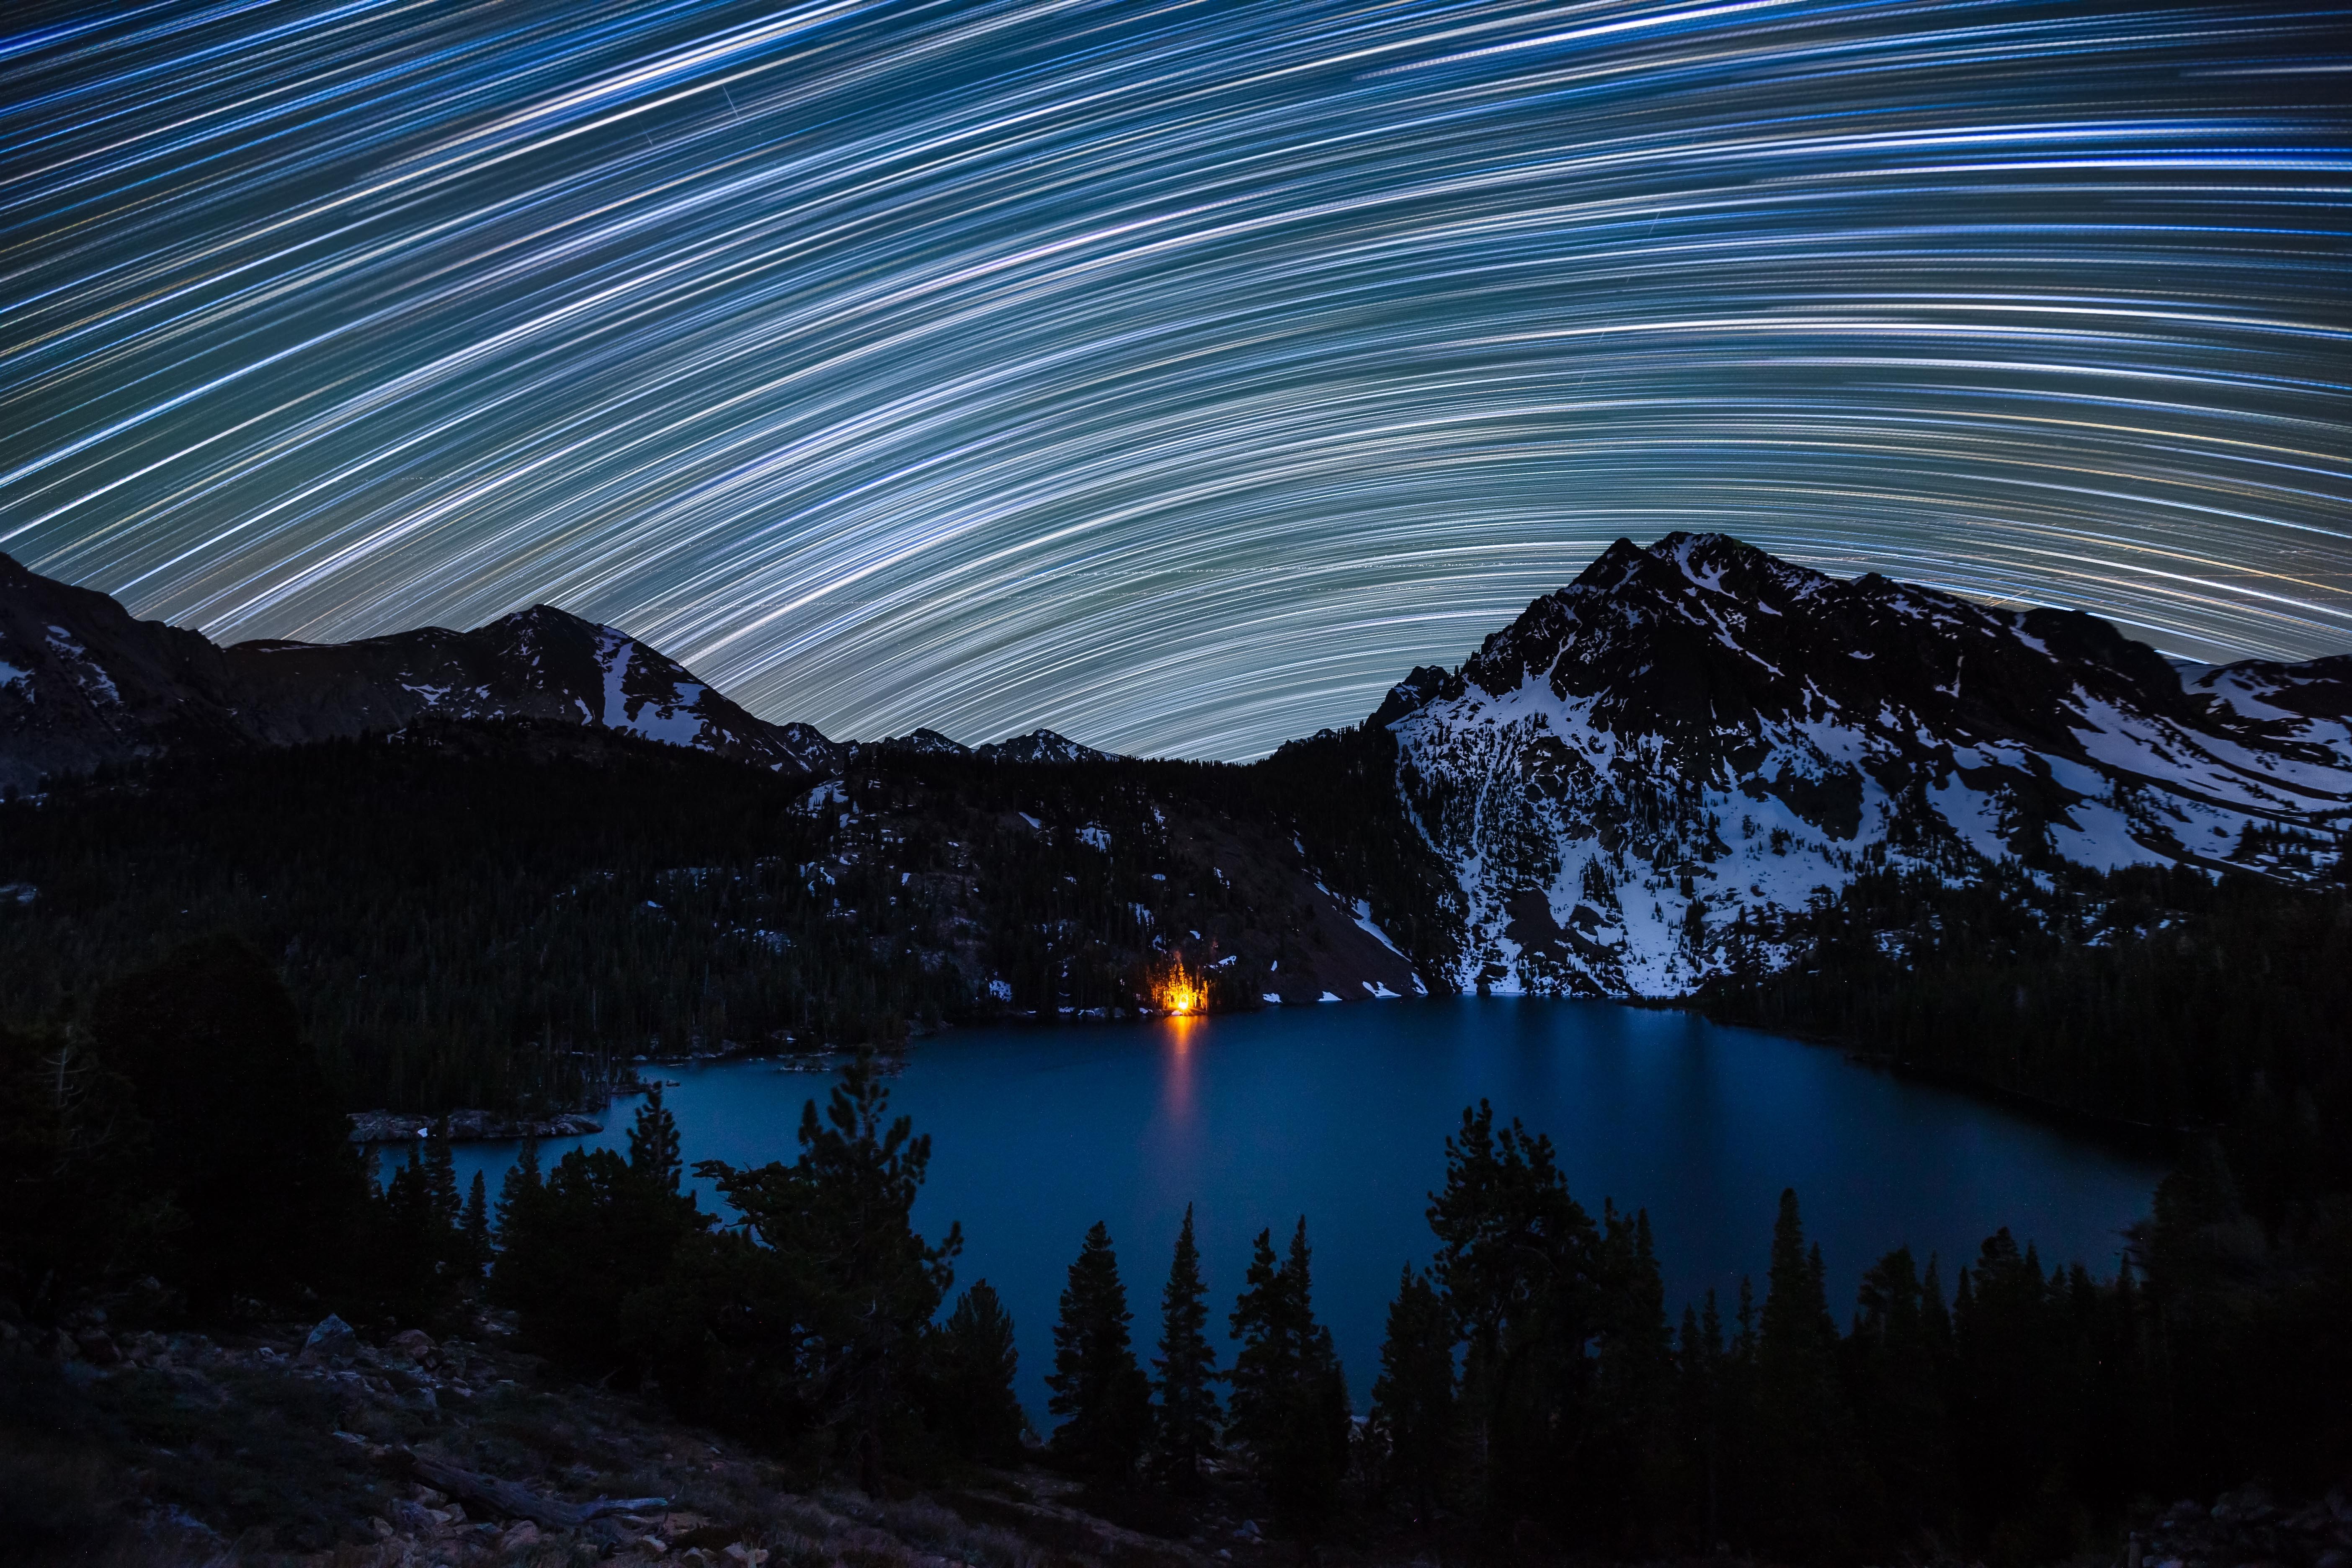 Mesmerizing Astronomy Photos Are The Best Of 2015 | Awaken